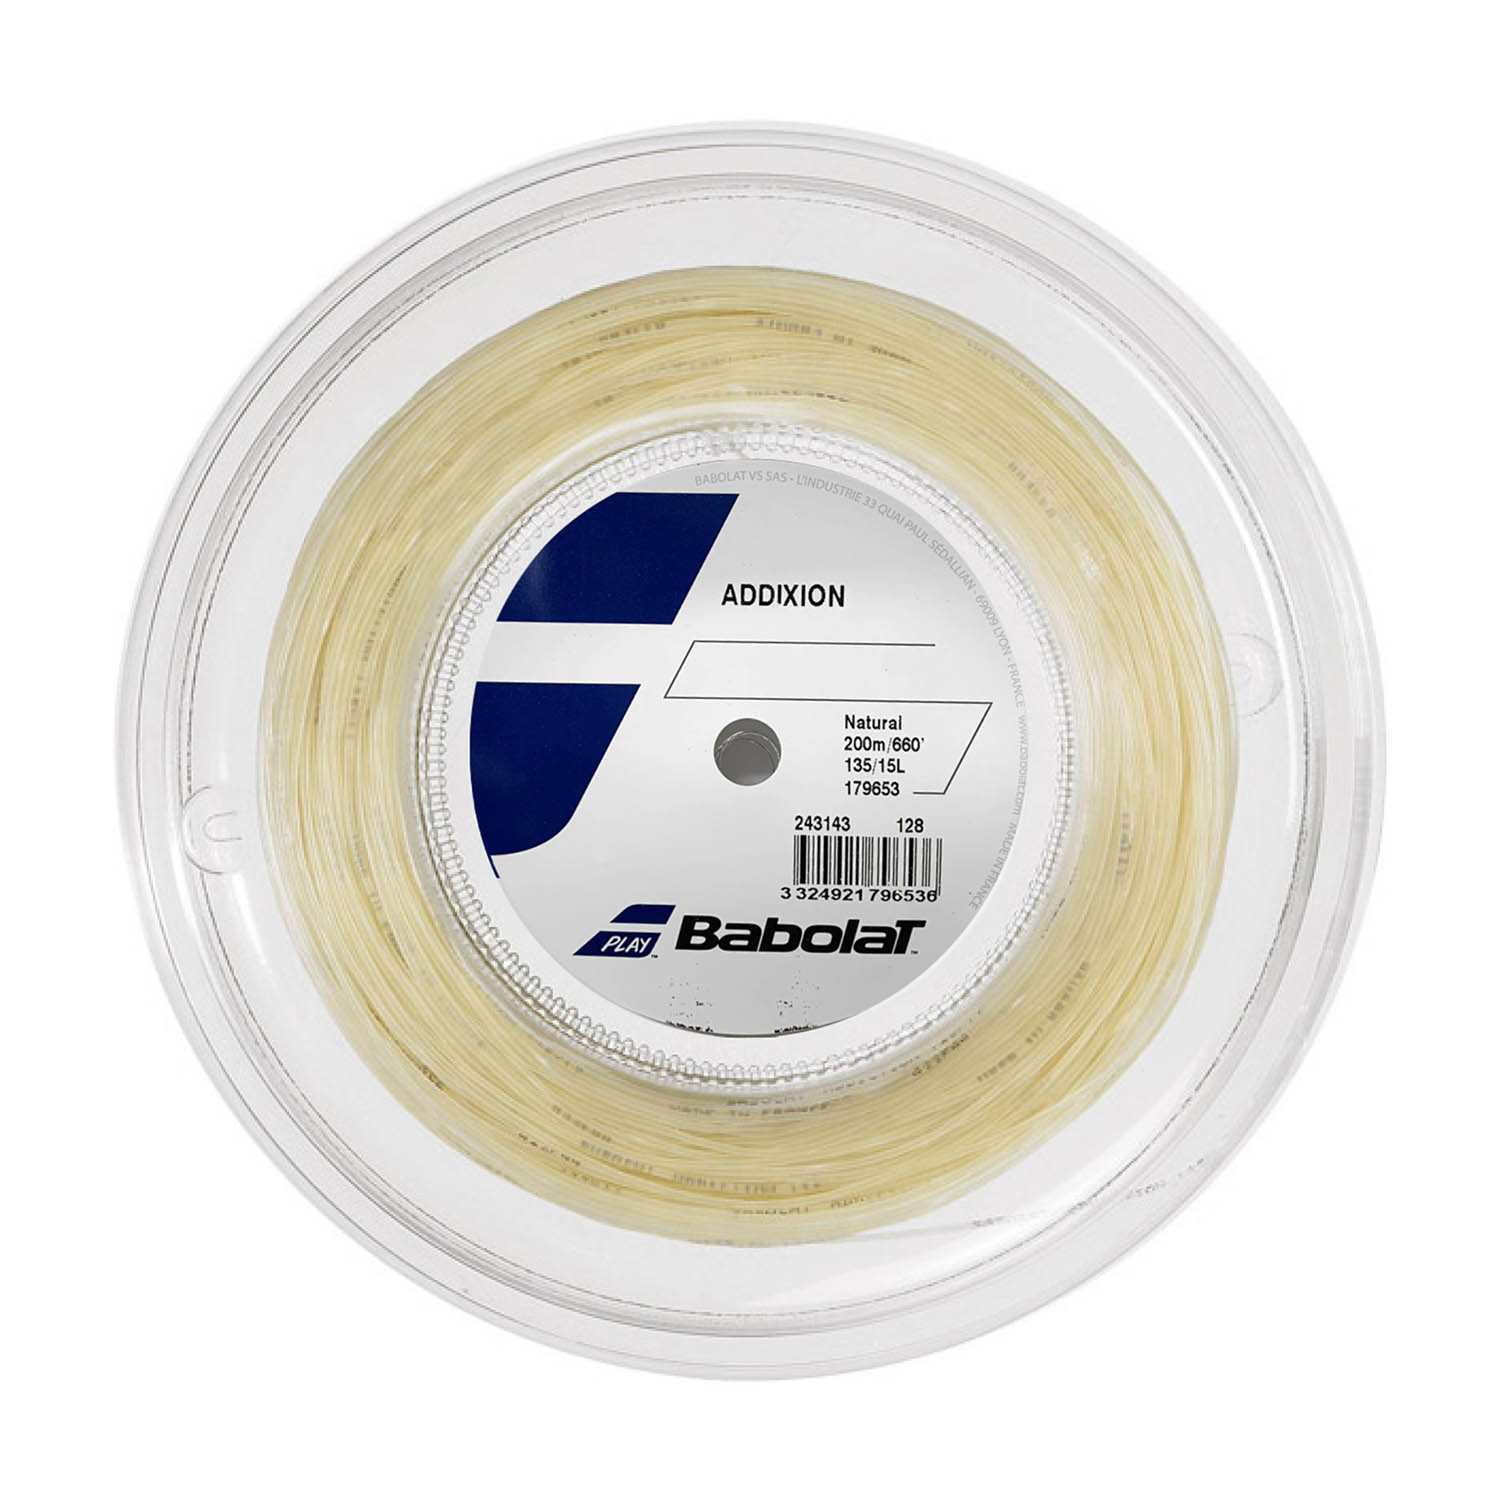 Babolat Addixion 1.35 String Reel 200 m - Natural